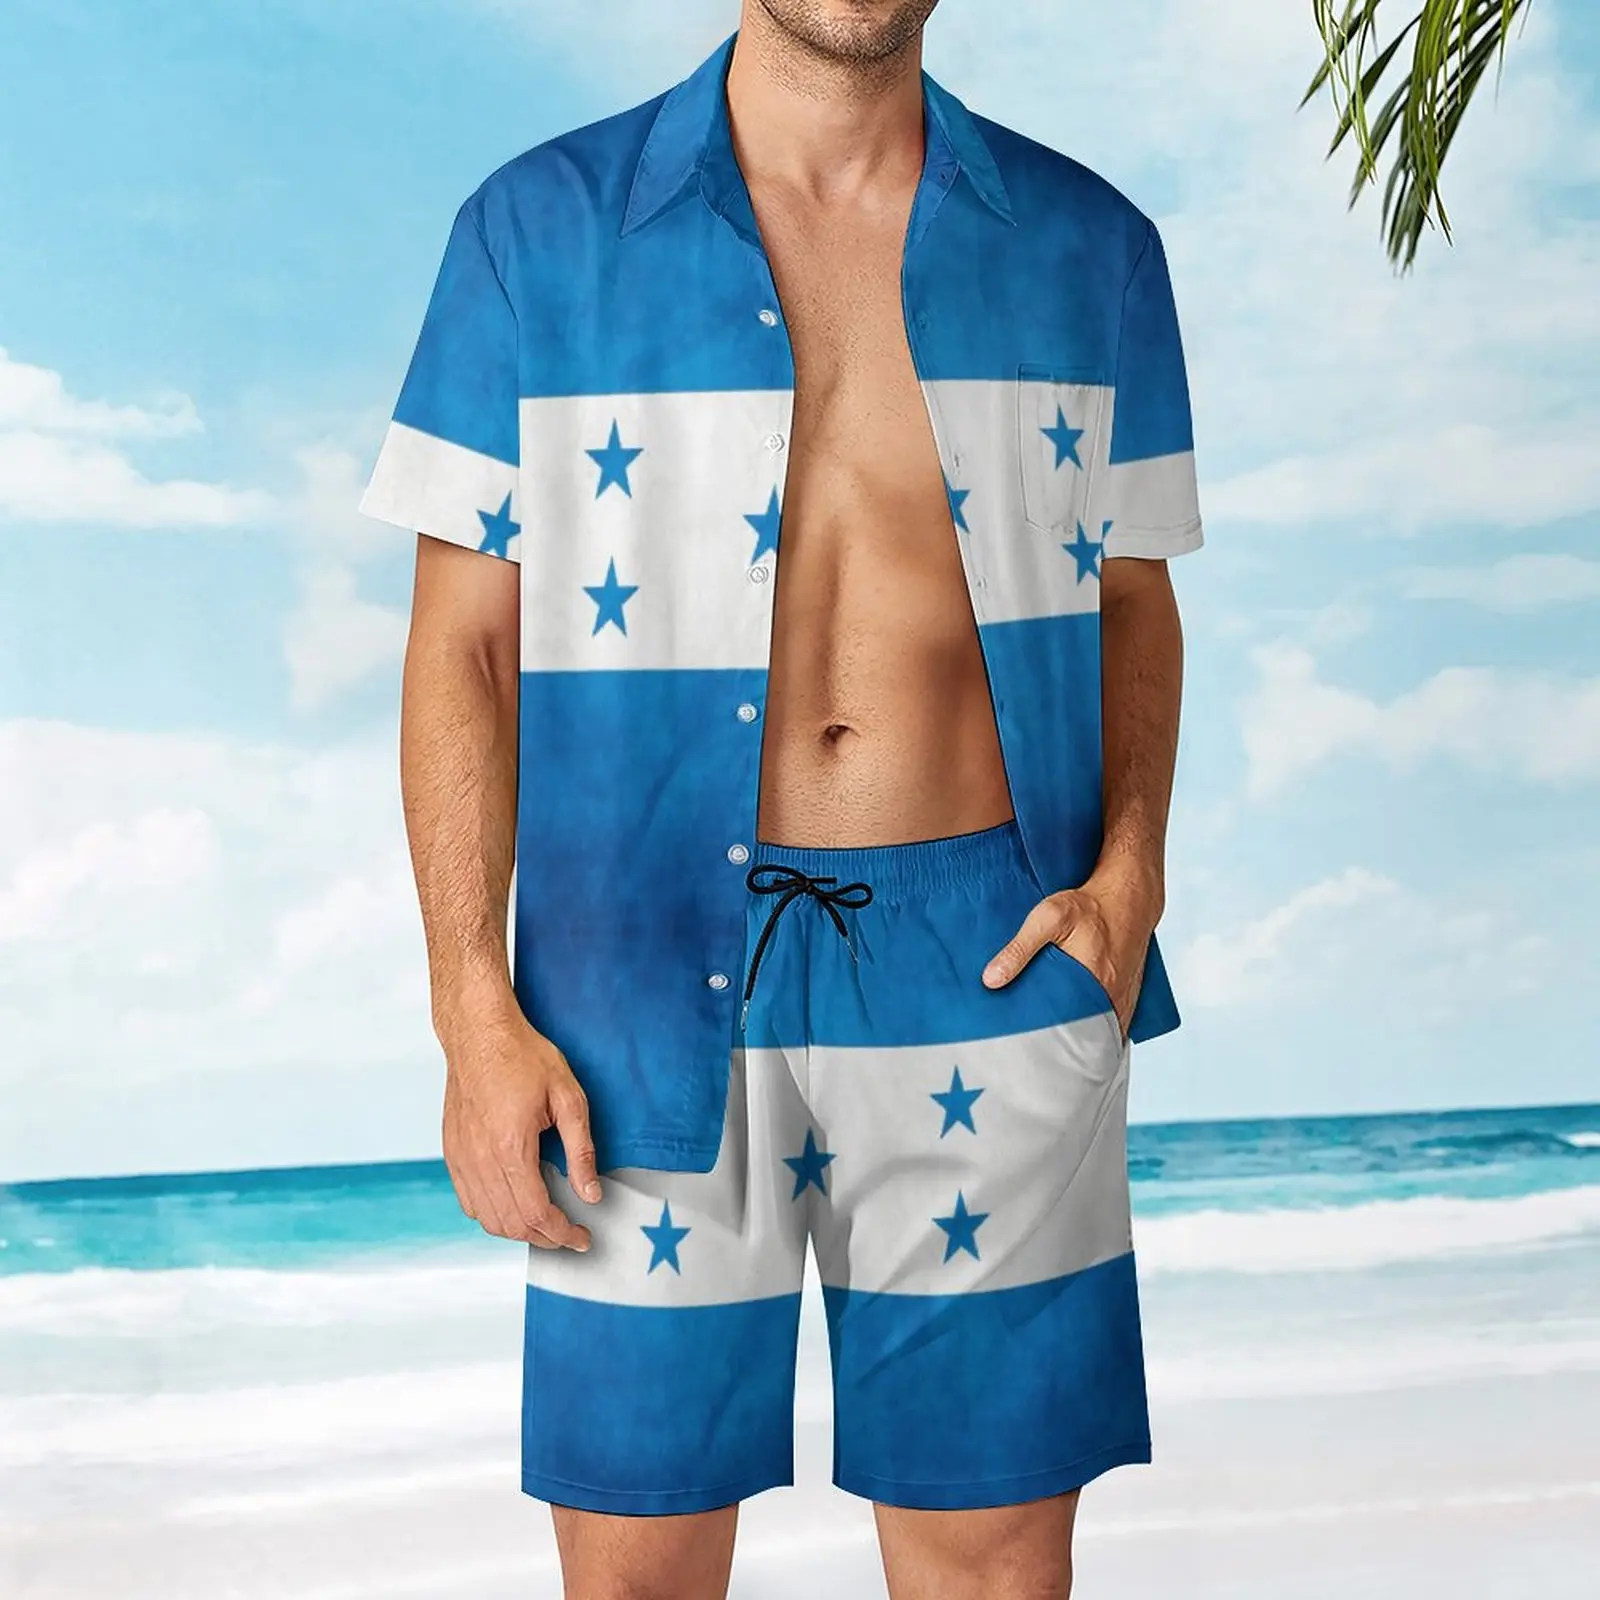 

Honduras Honduran Flag National Flag of Honduras Swimming Men's Beach Suit Graphic 2 Pieces Suit High Quality